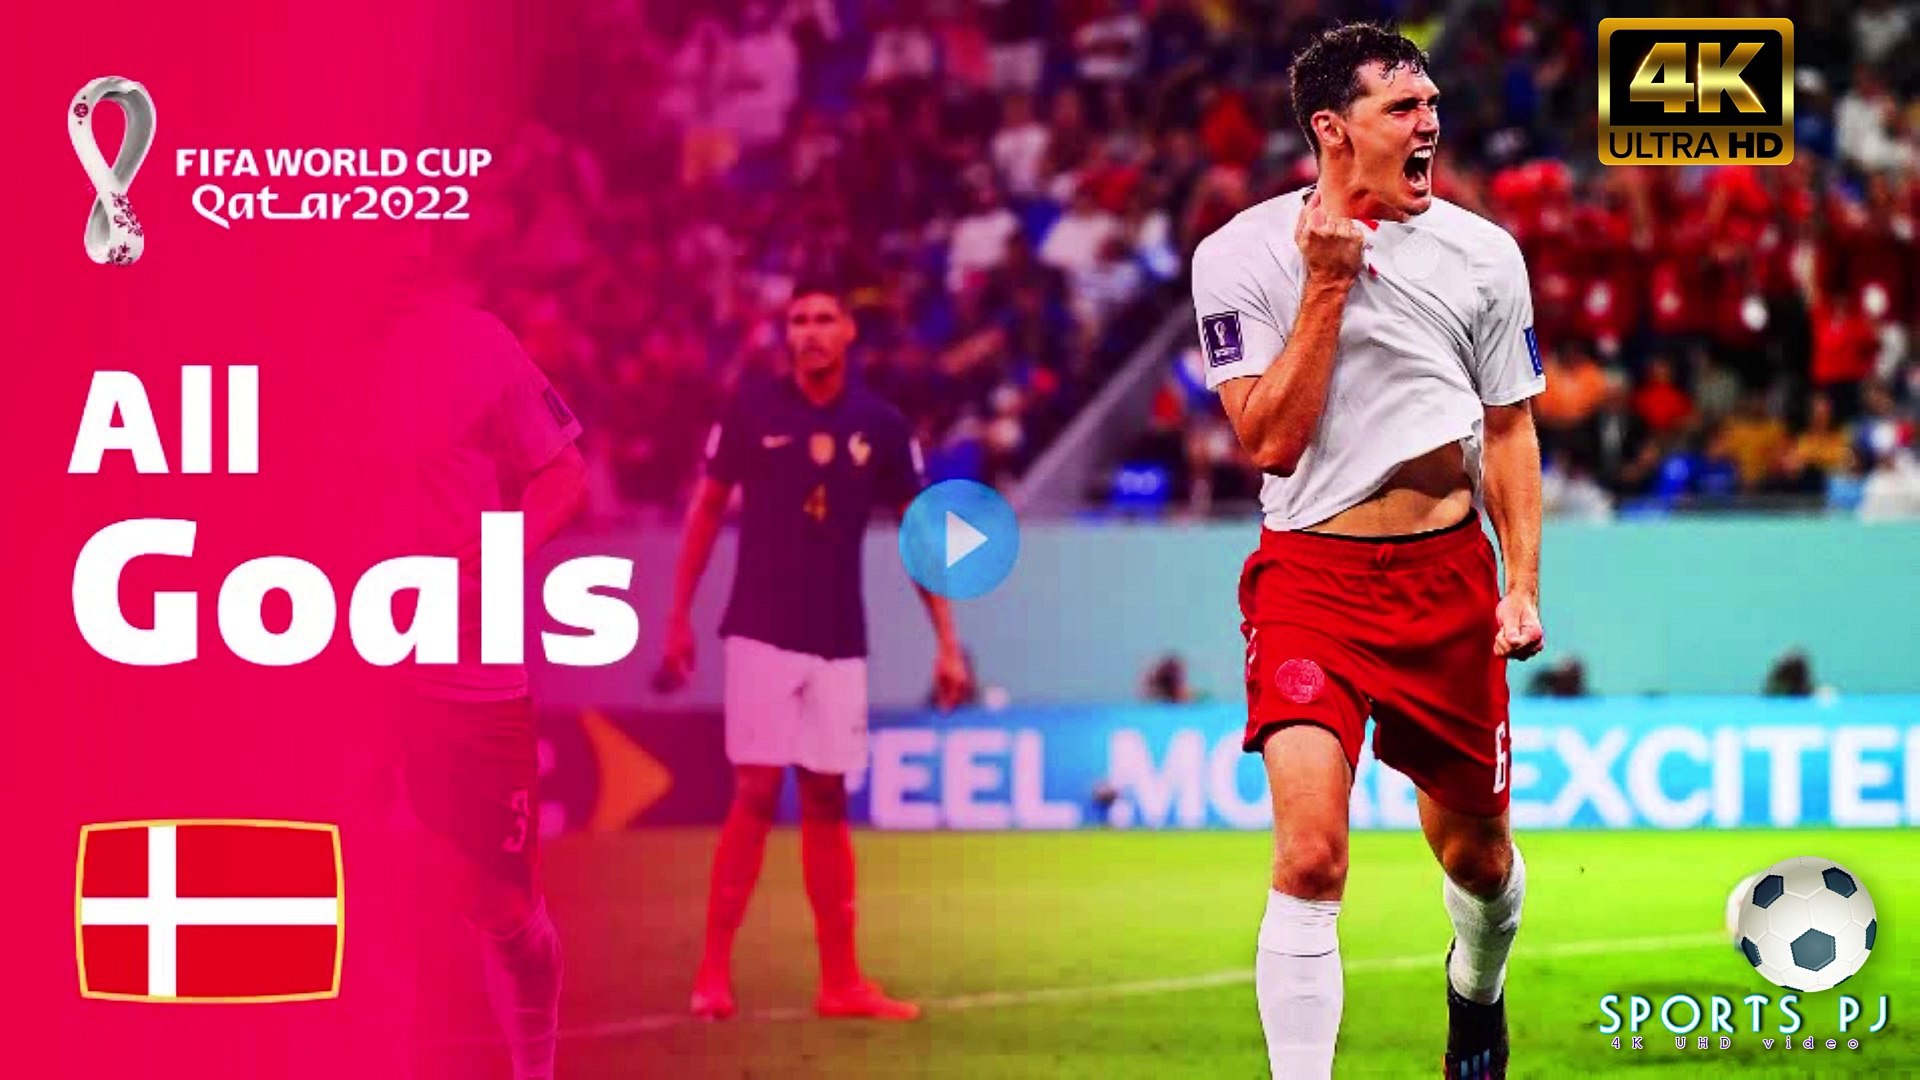 Denmark All Goals FIFA World Cup Qatar 2022™,4k uhd video 2022